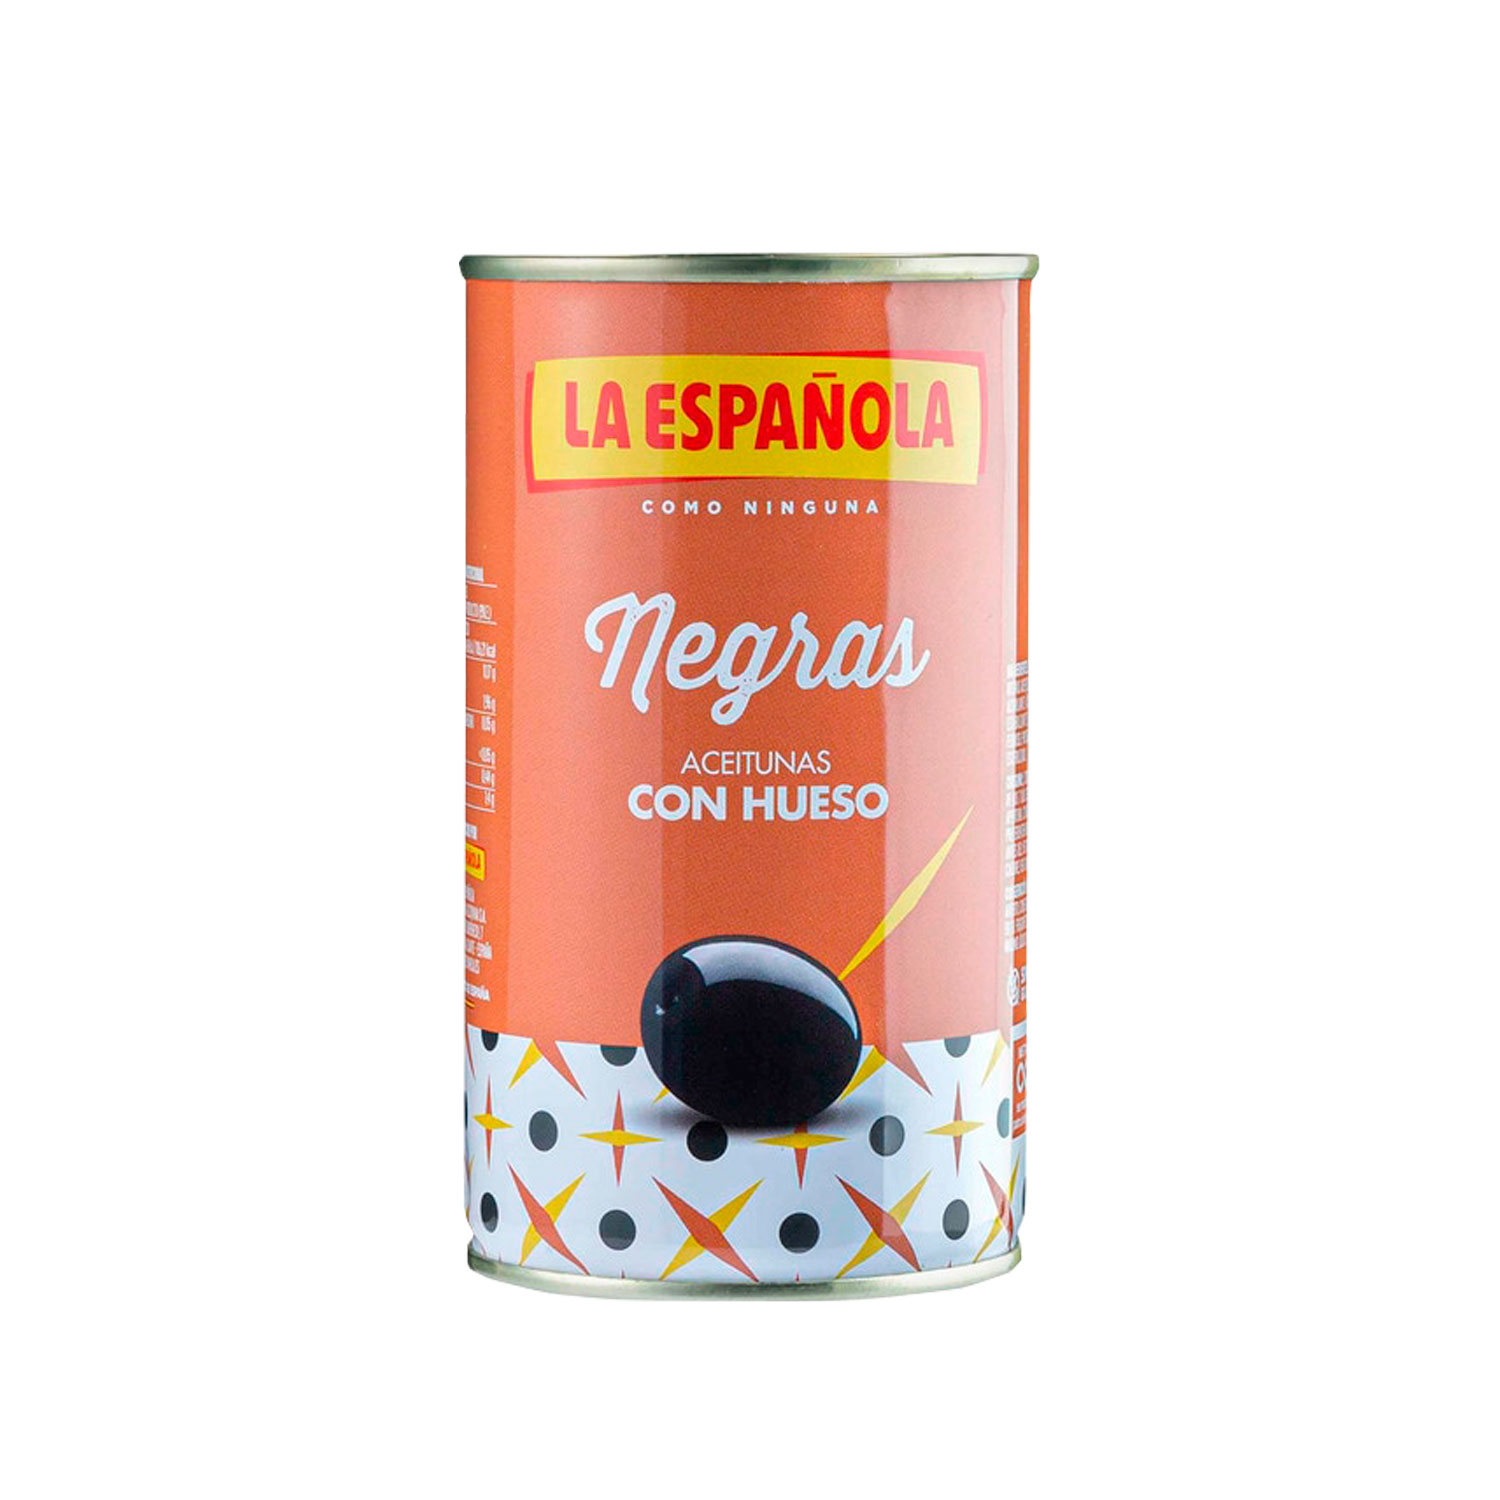 La española aceitunas negras con hueso lata 185 g